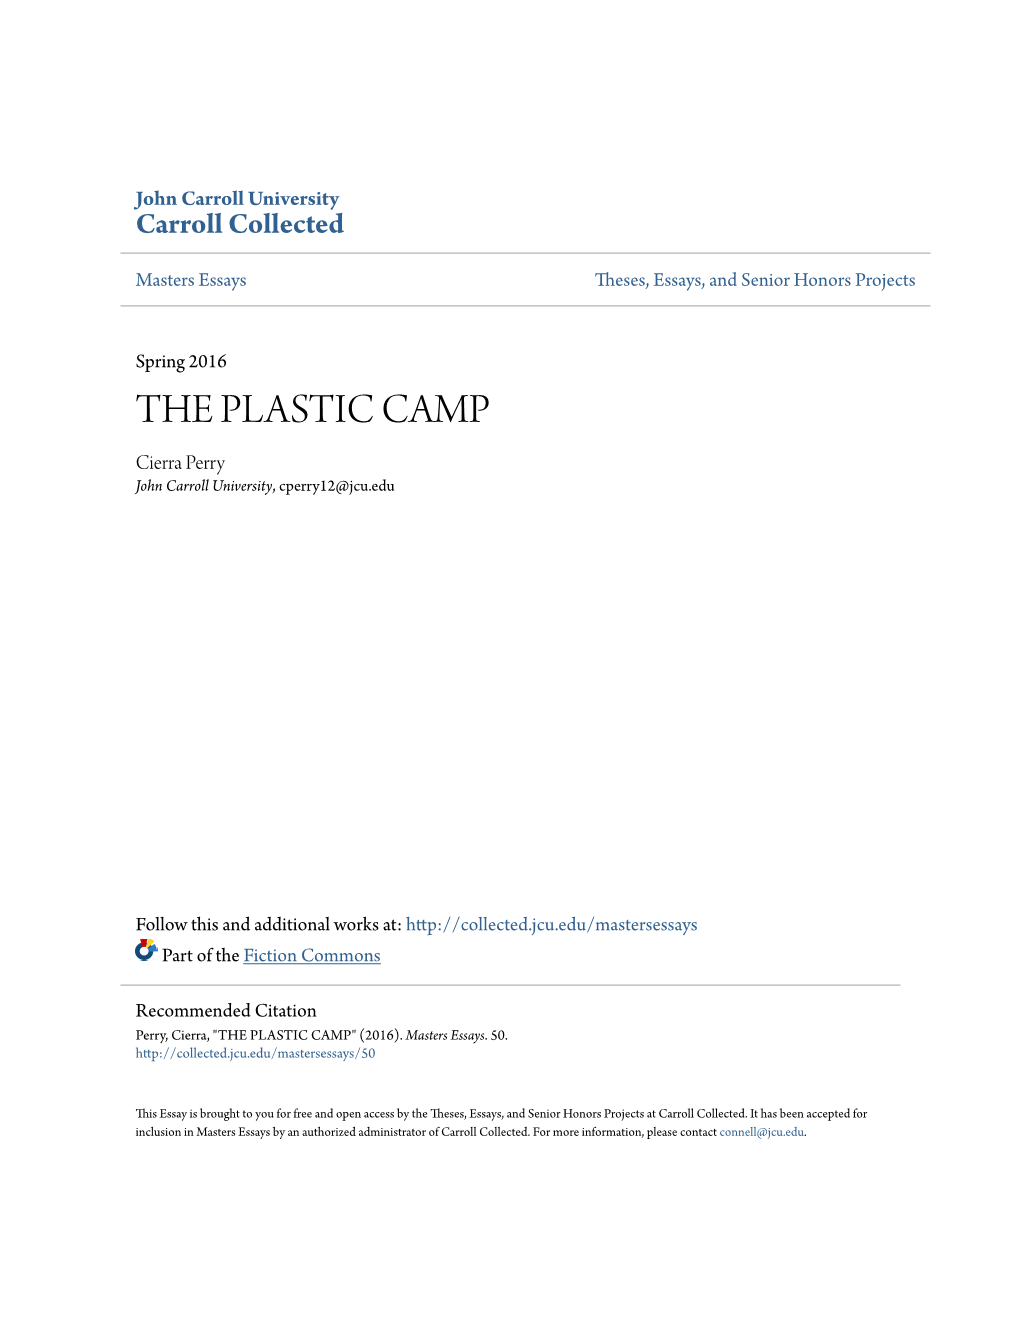 THE PLASTIC CAMP Cierra Perry John Carroll University, Cperry12@Jcu.Edu